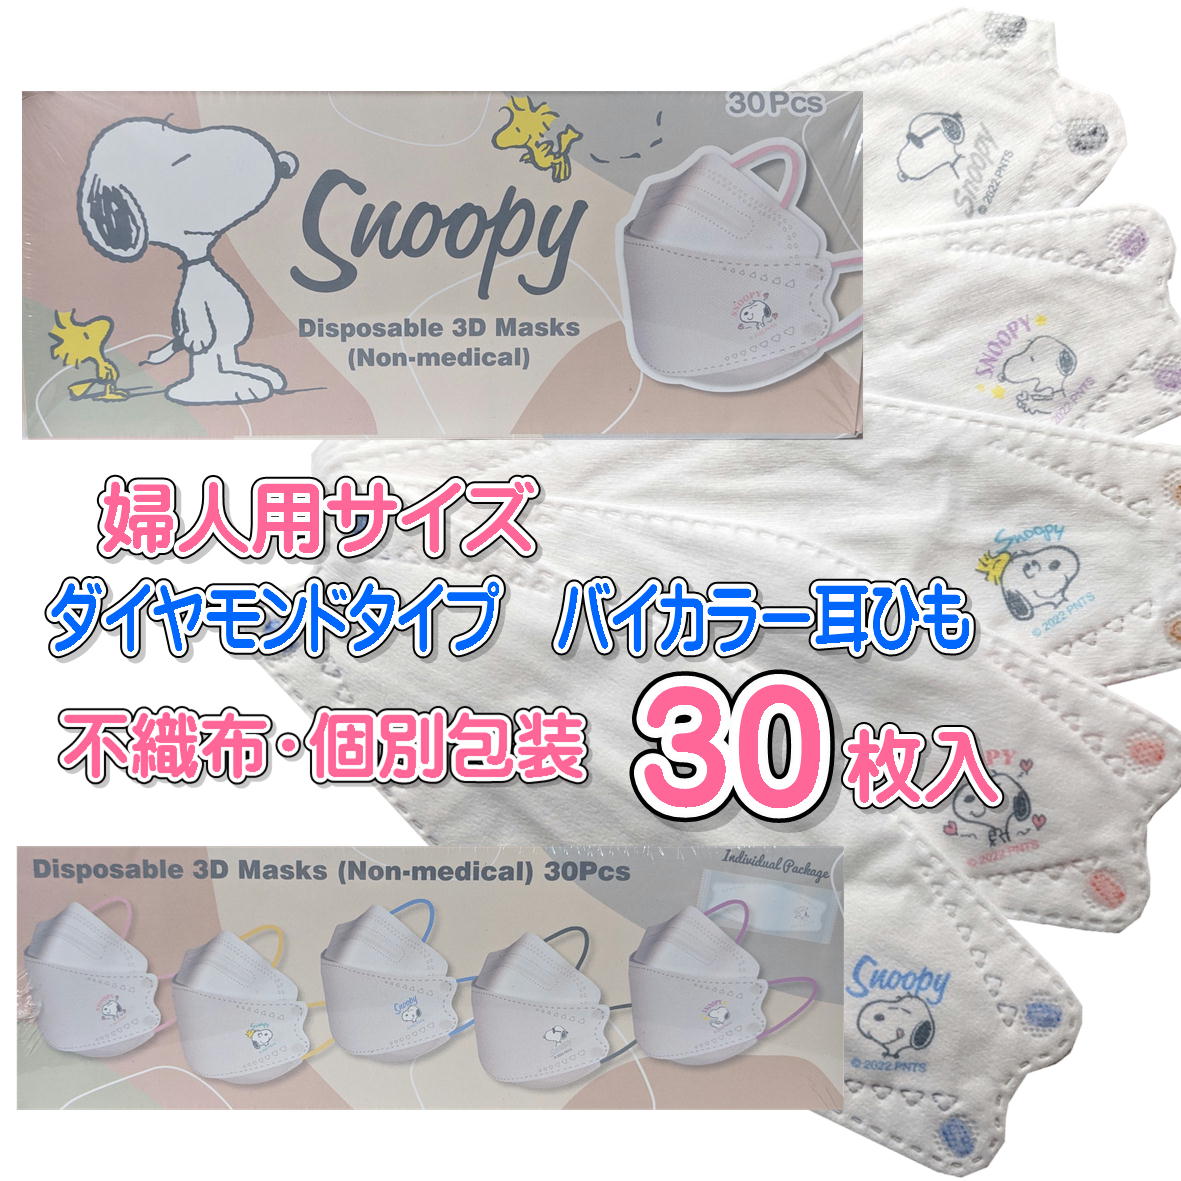 Mask 3D - Snoopy Colour EarLoop Q5x6 (Japan Edition)